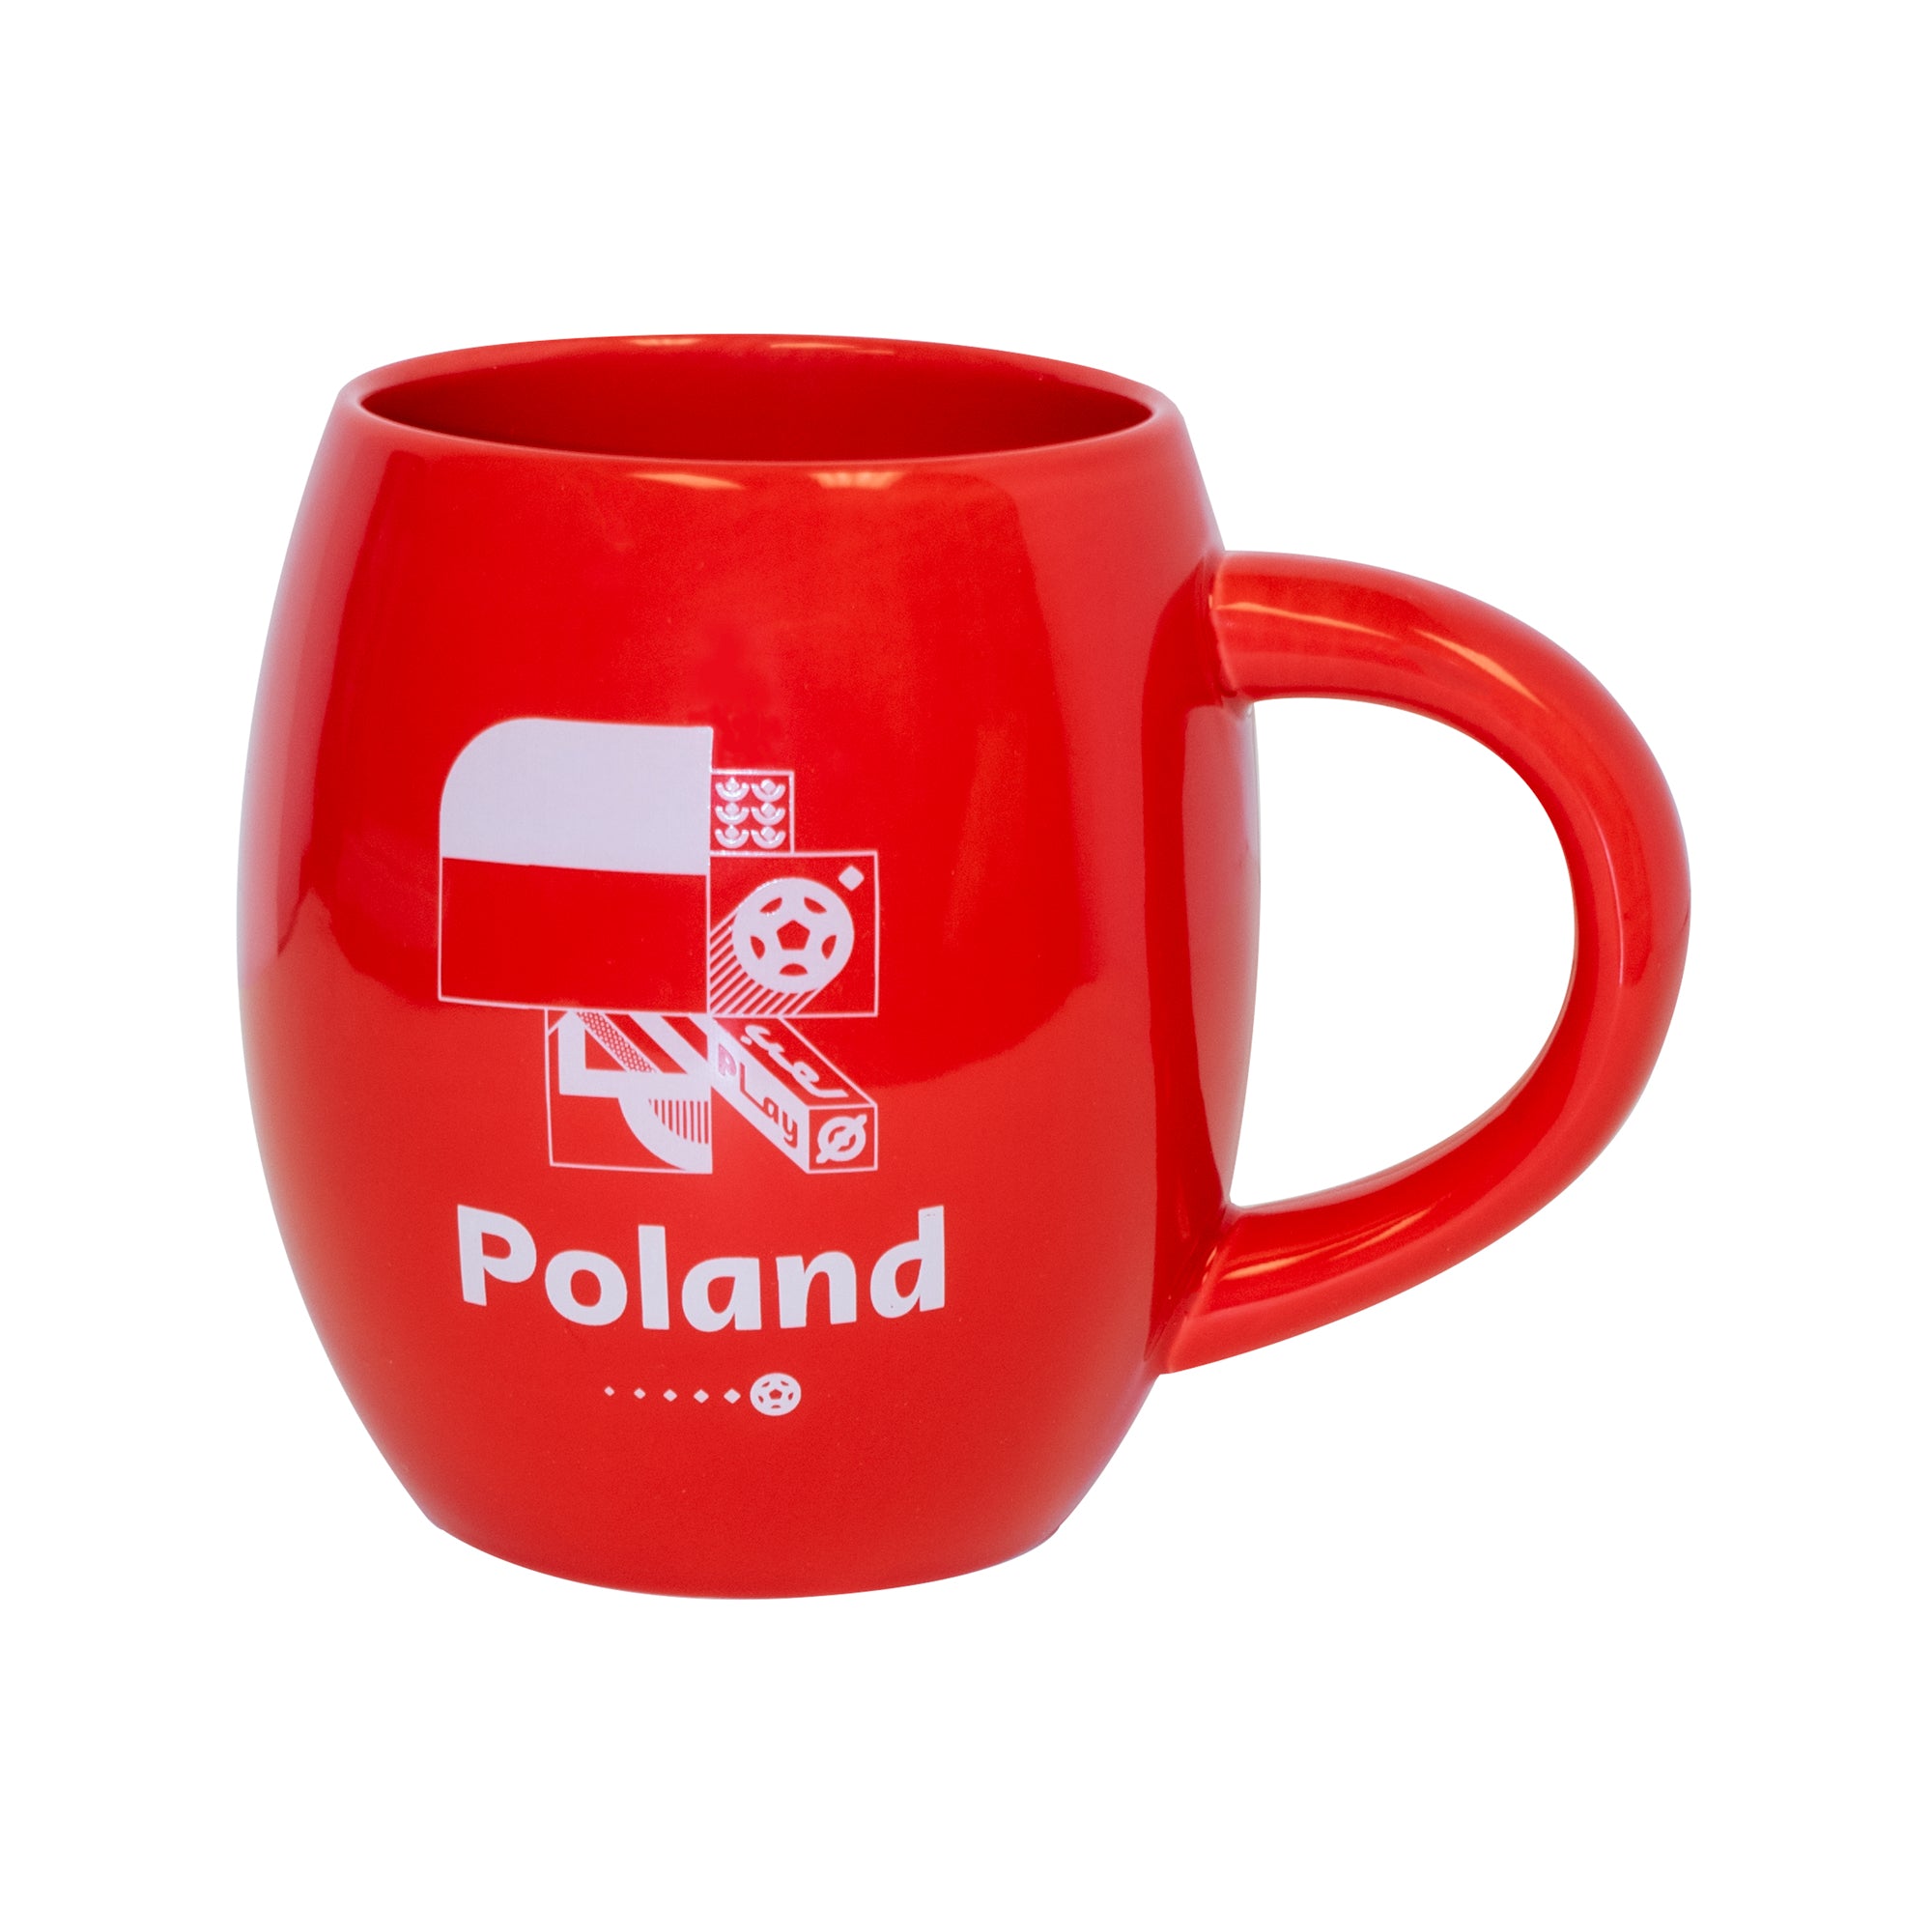 mug-poland-front-worldcup-productimage.jpg